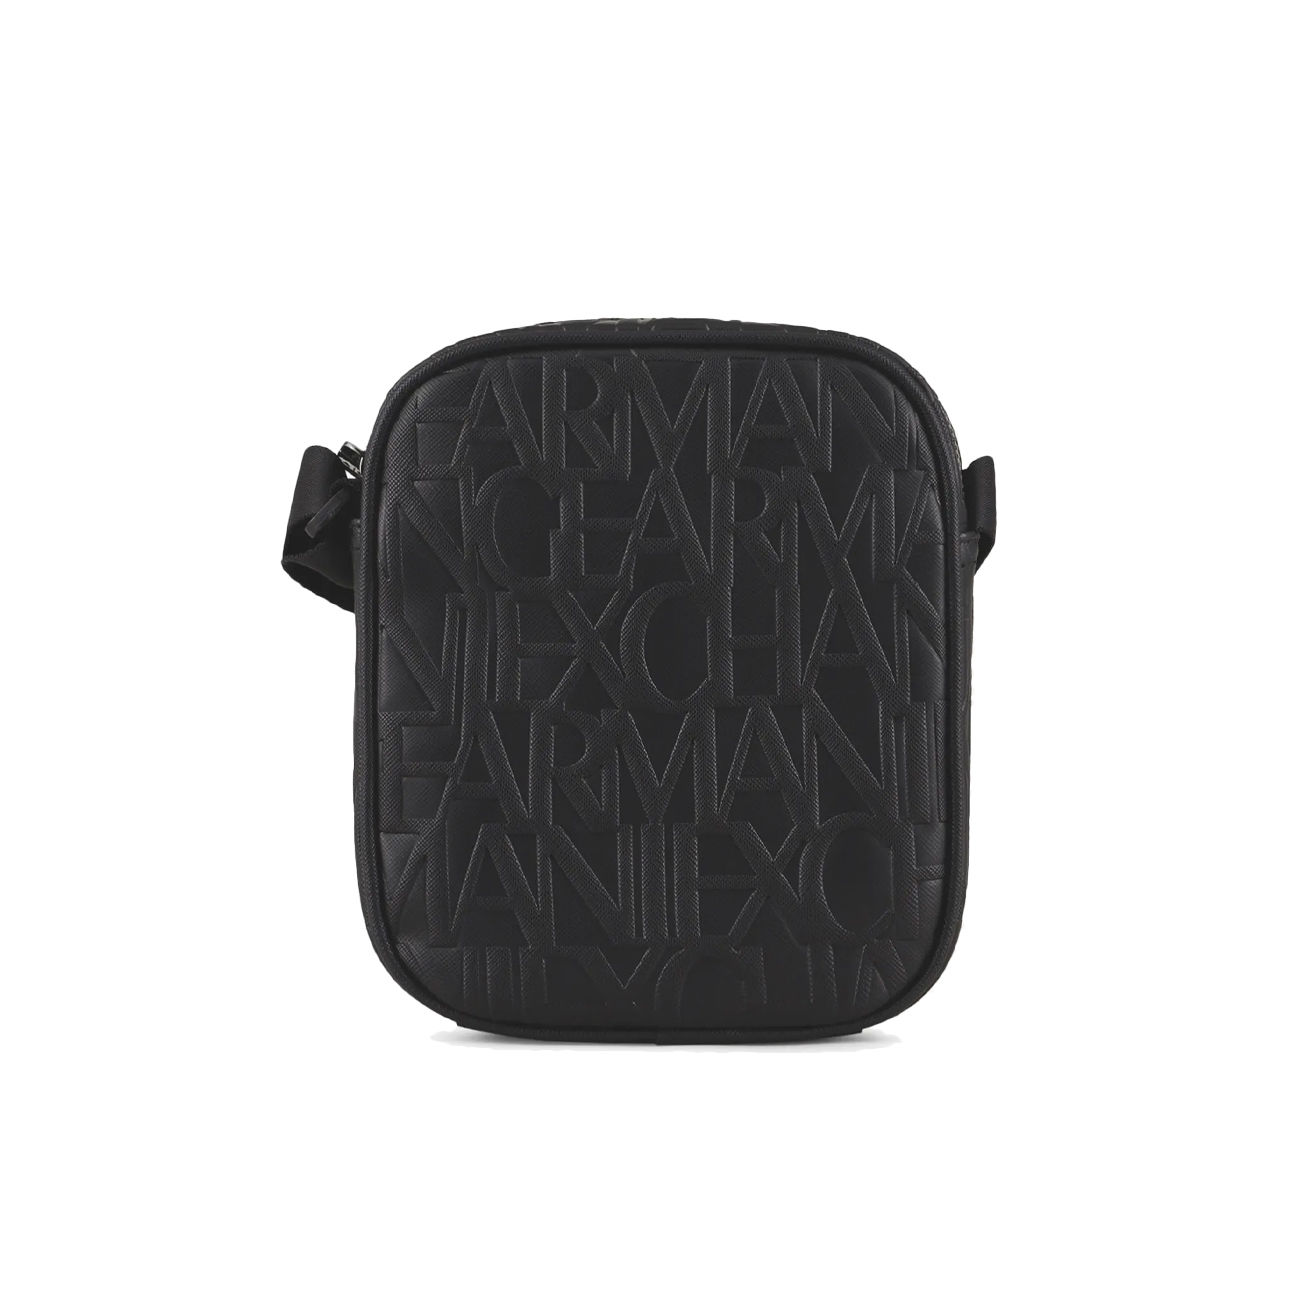 AX Armani Exchange women's fashion black flap handbag Satchel bag purse |  eBay